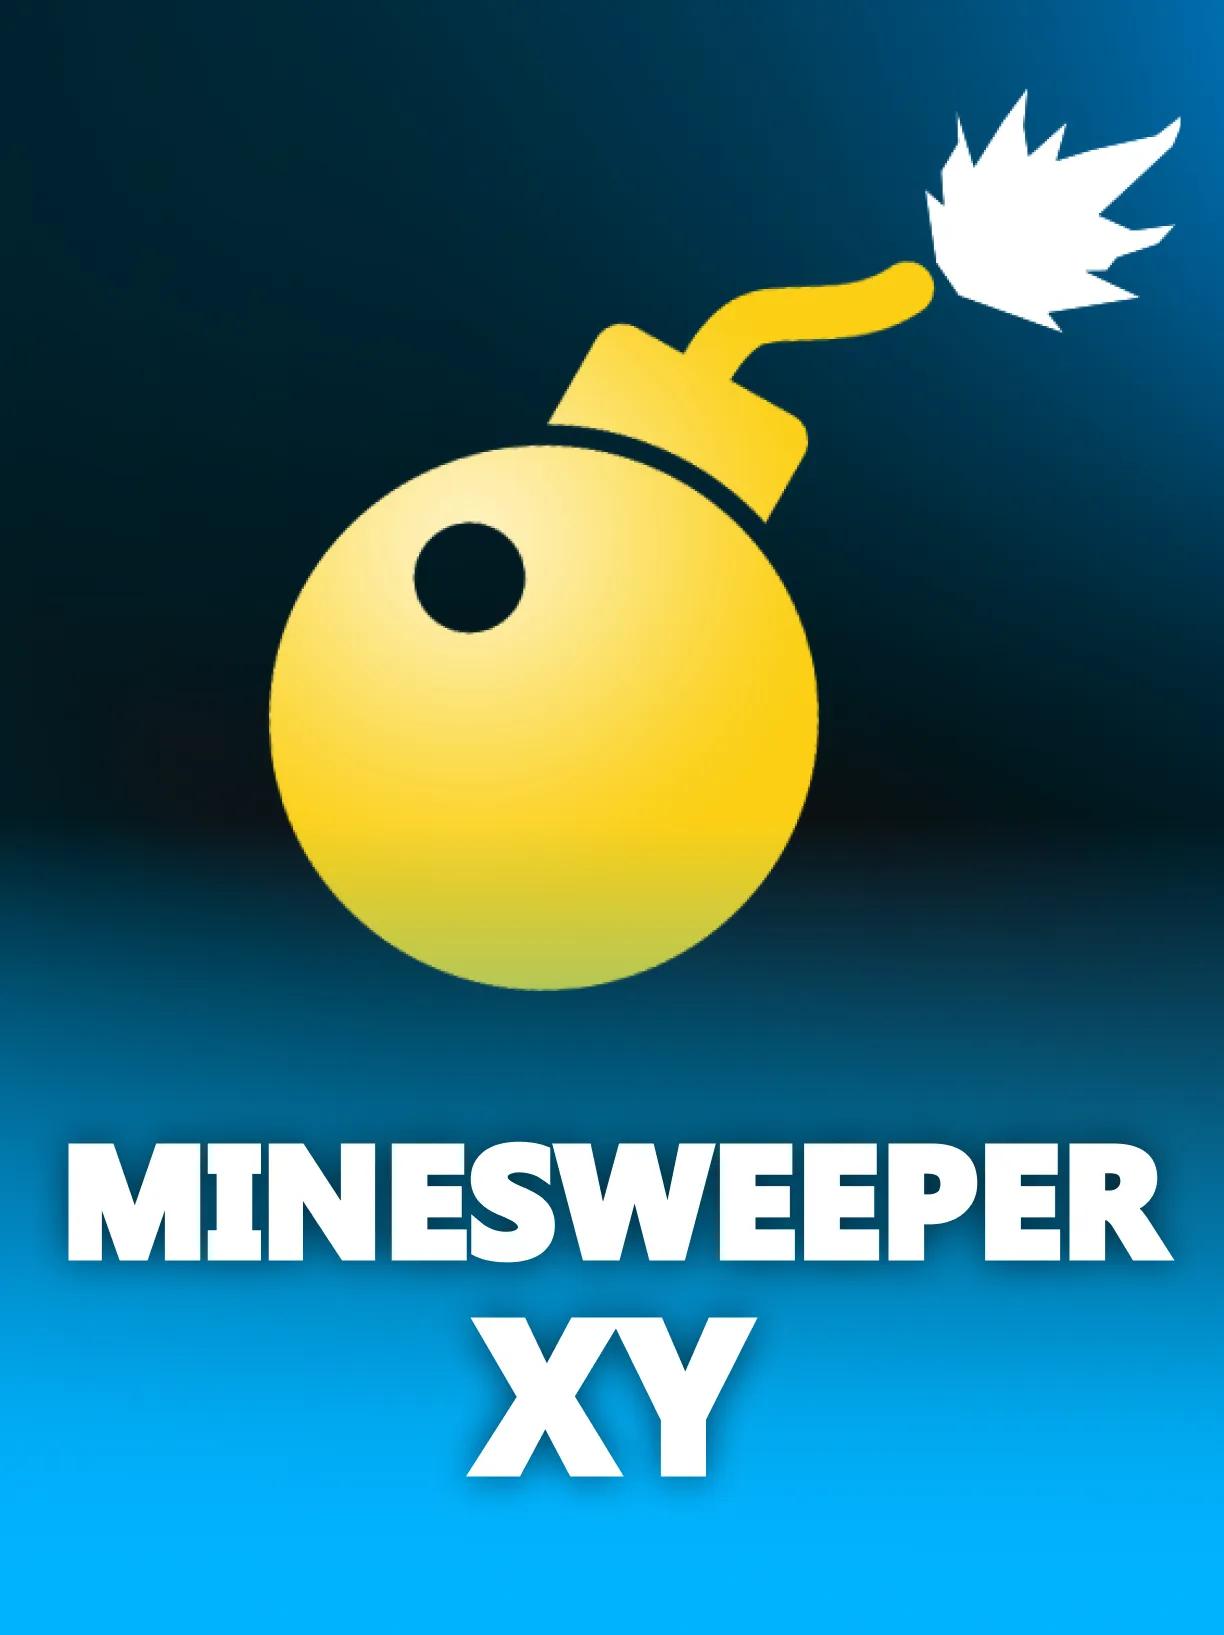 Minesweeper_XY_square.webp